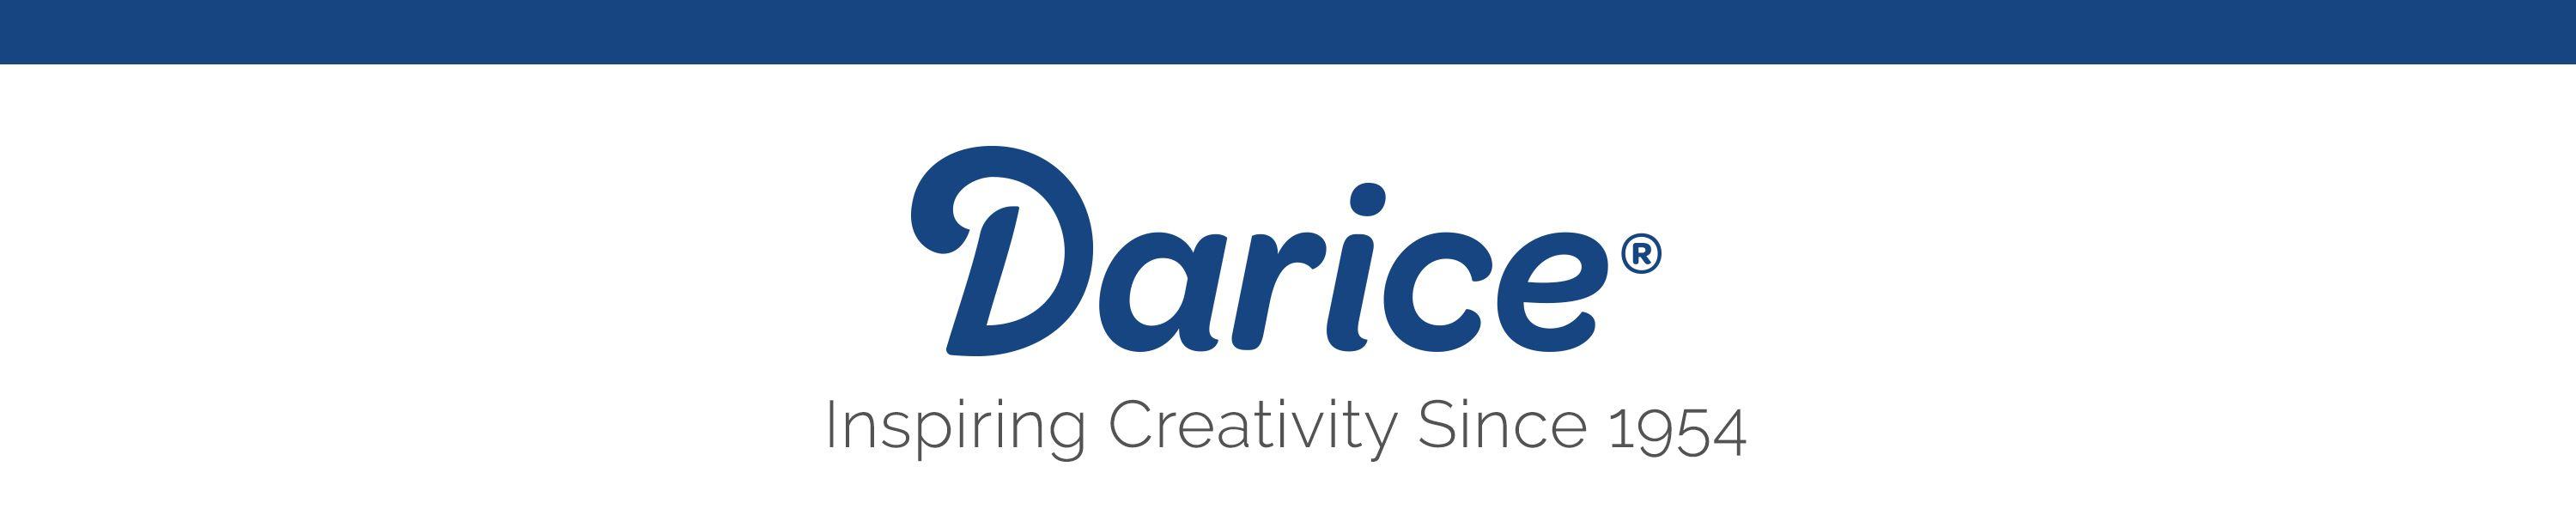 Darice Logo - Amazon.com: Darice